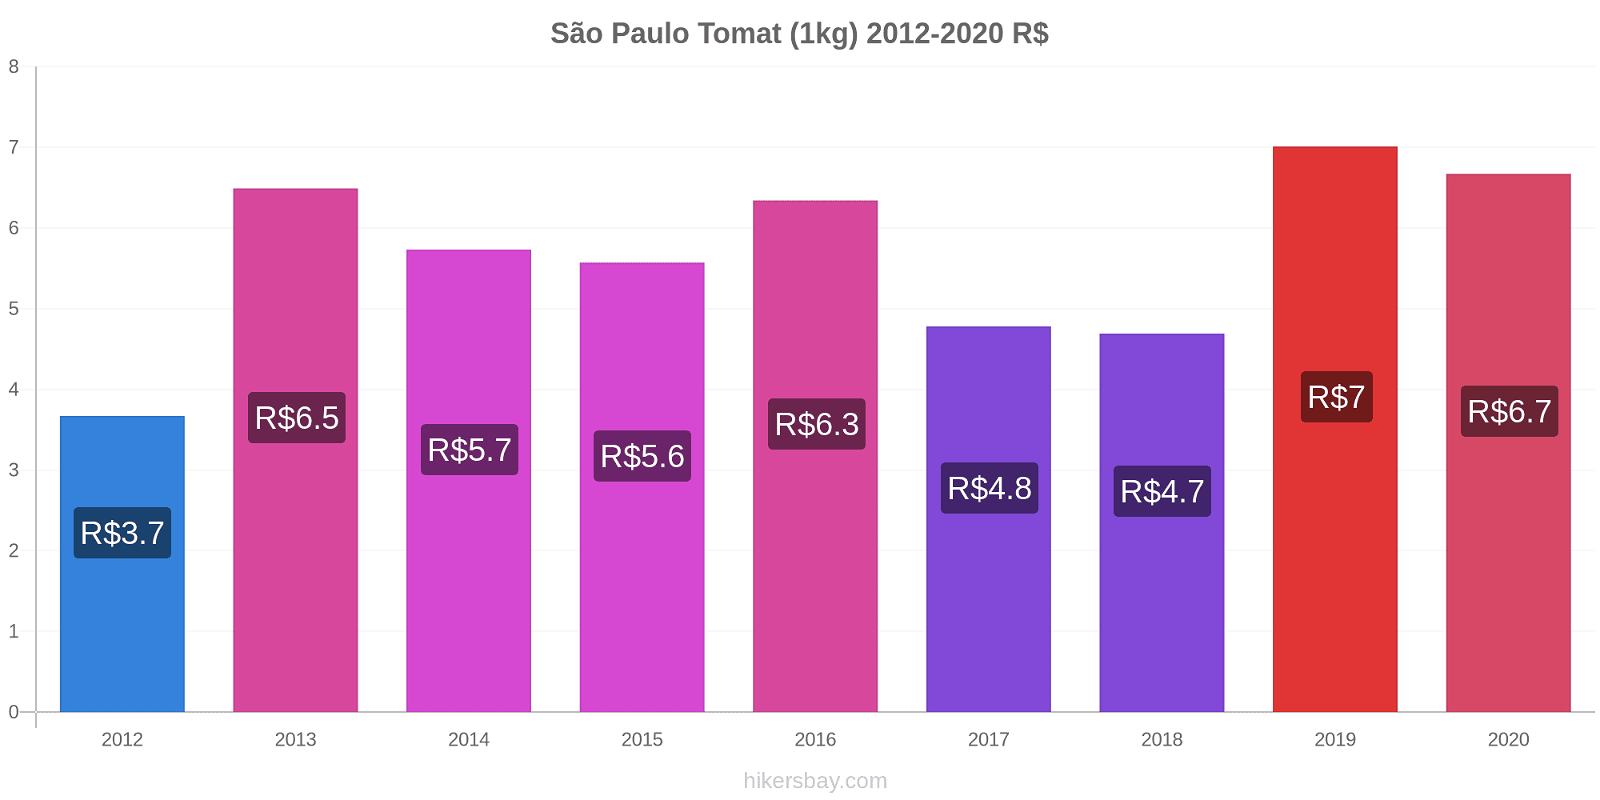 São Paulo perubahan harga Tomat (1kg) hikersbay.com